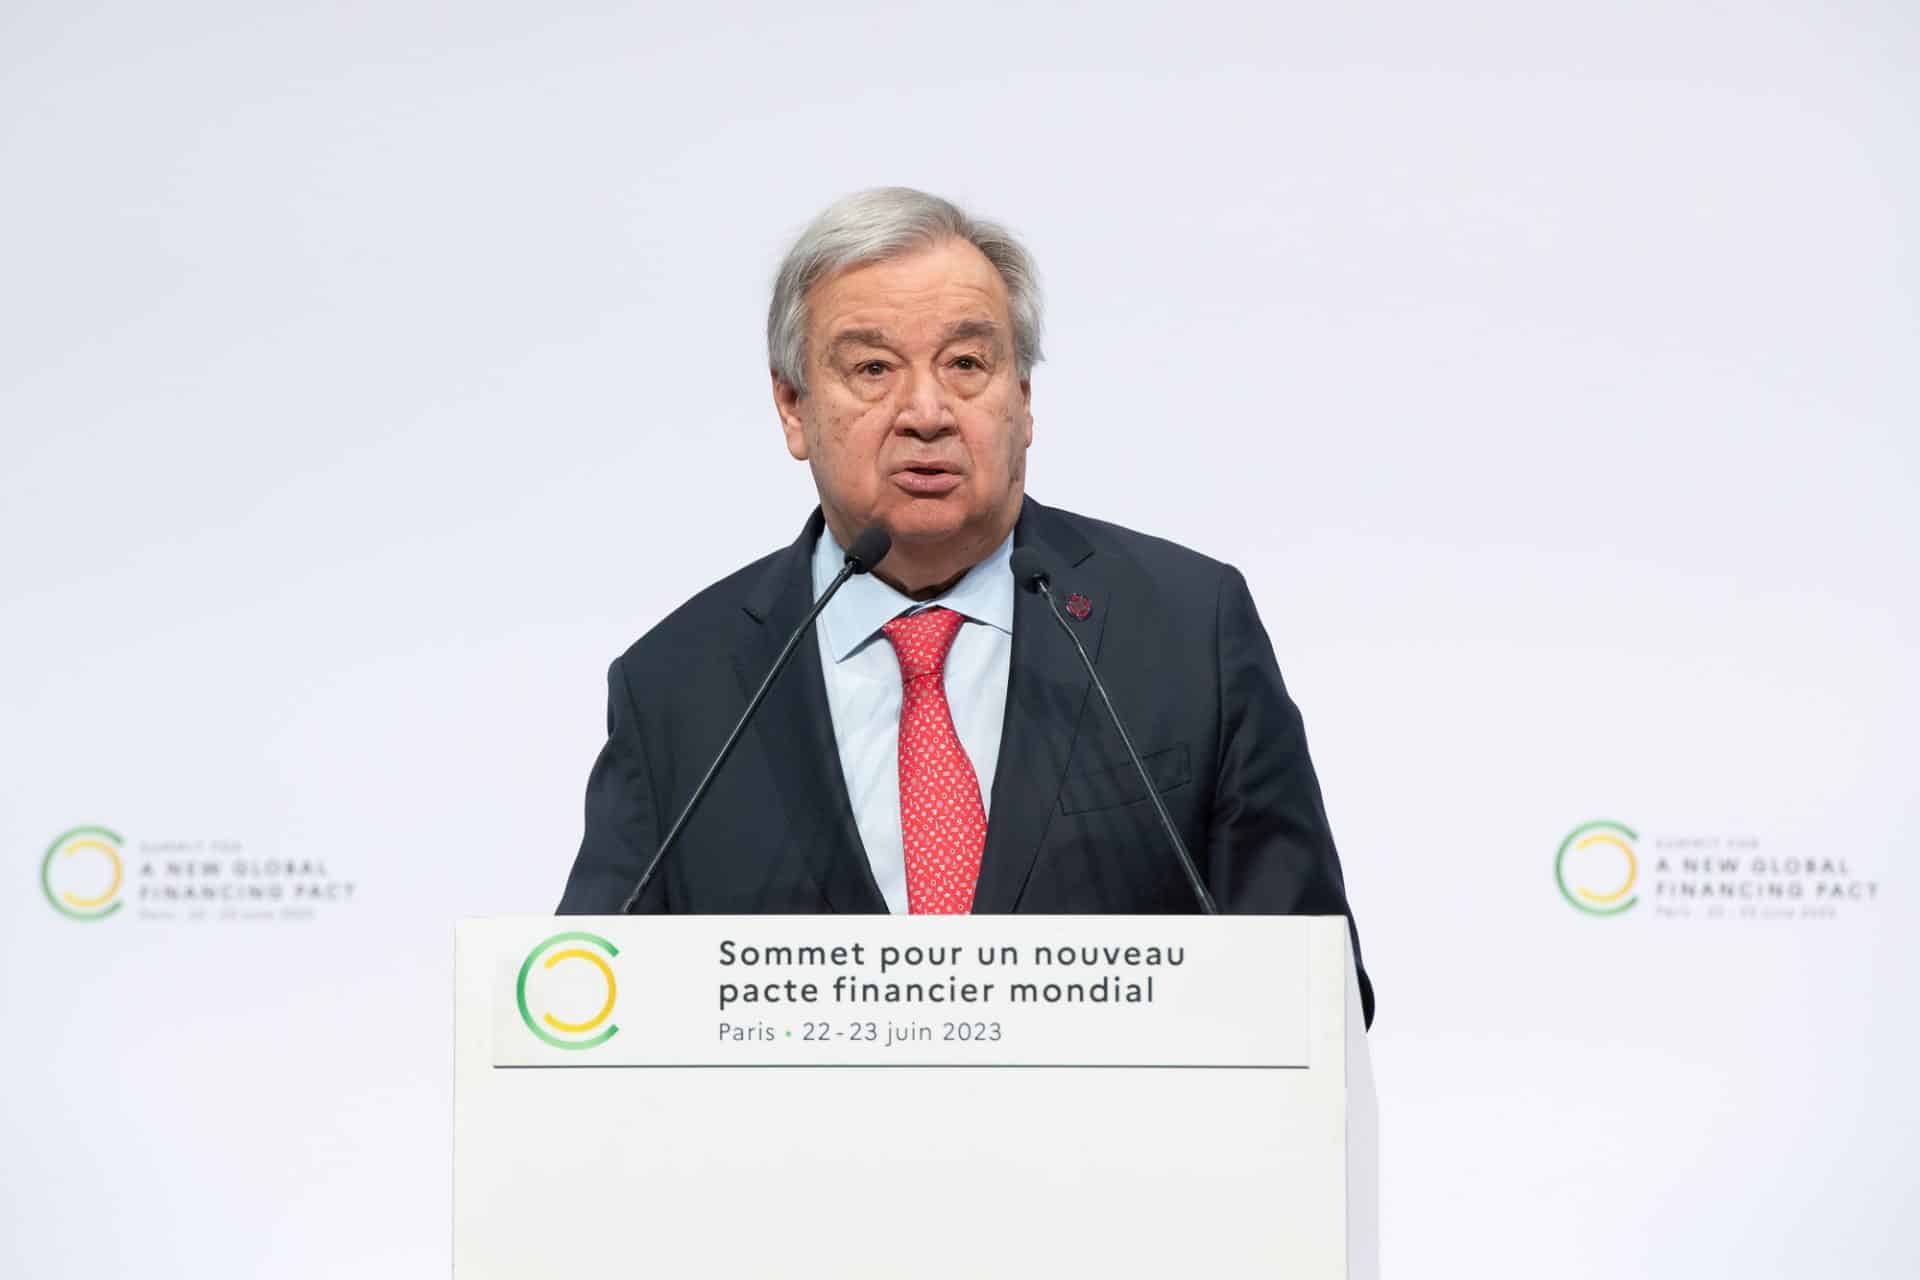 O Secretário-Geral António Guterres discursa na Cimeira de Paris sobre Finanças Globais, organizada por Emmanuel Macron, Presidente da República Francesa.